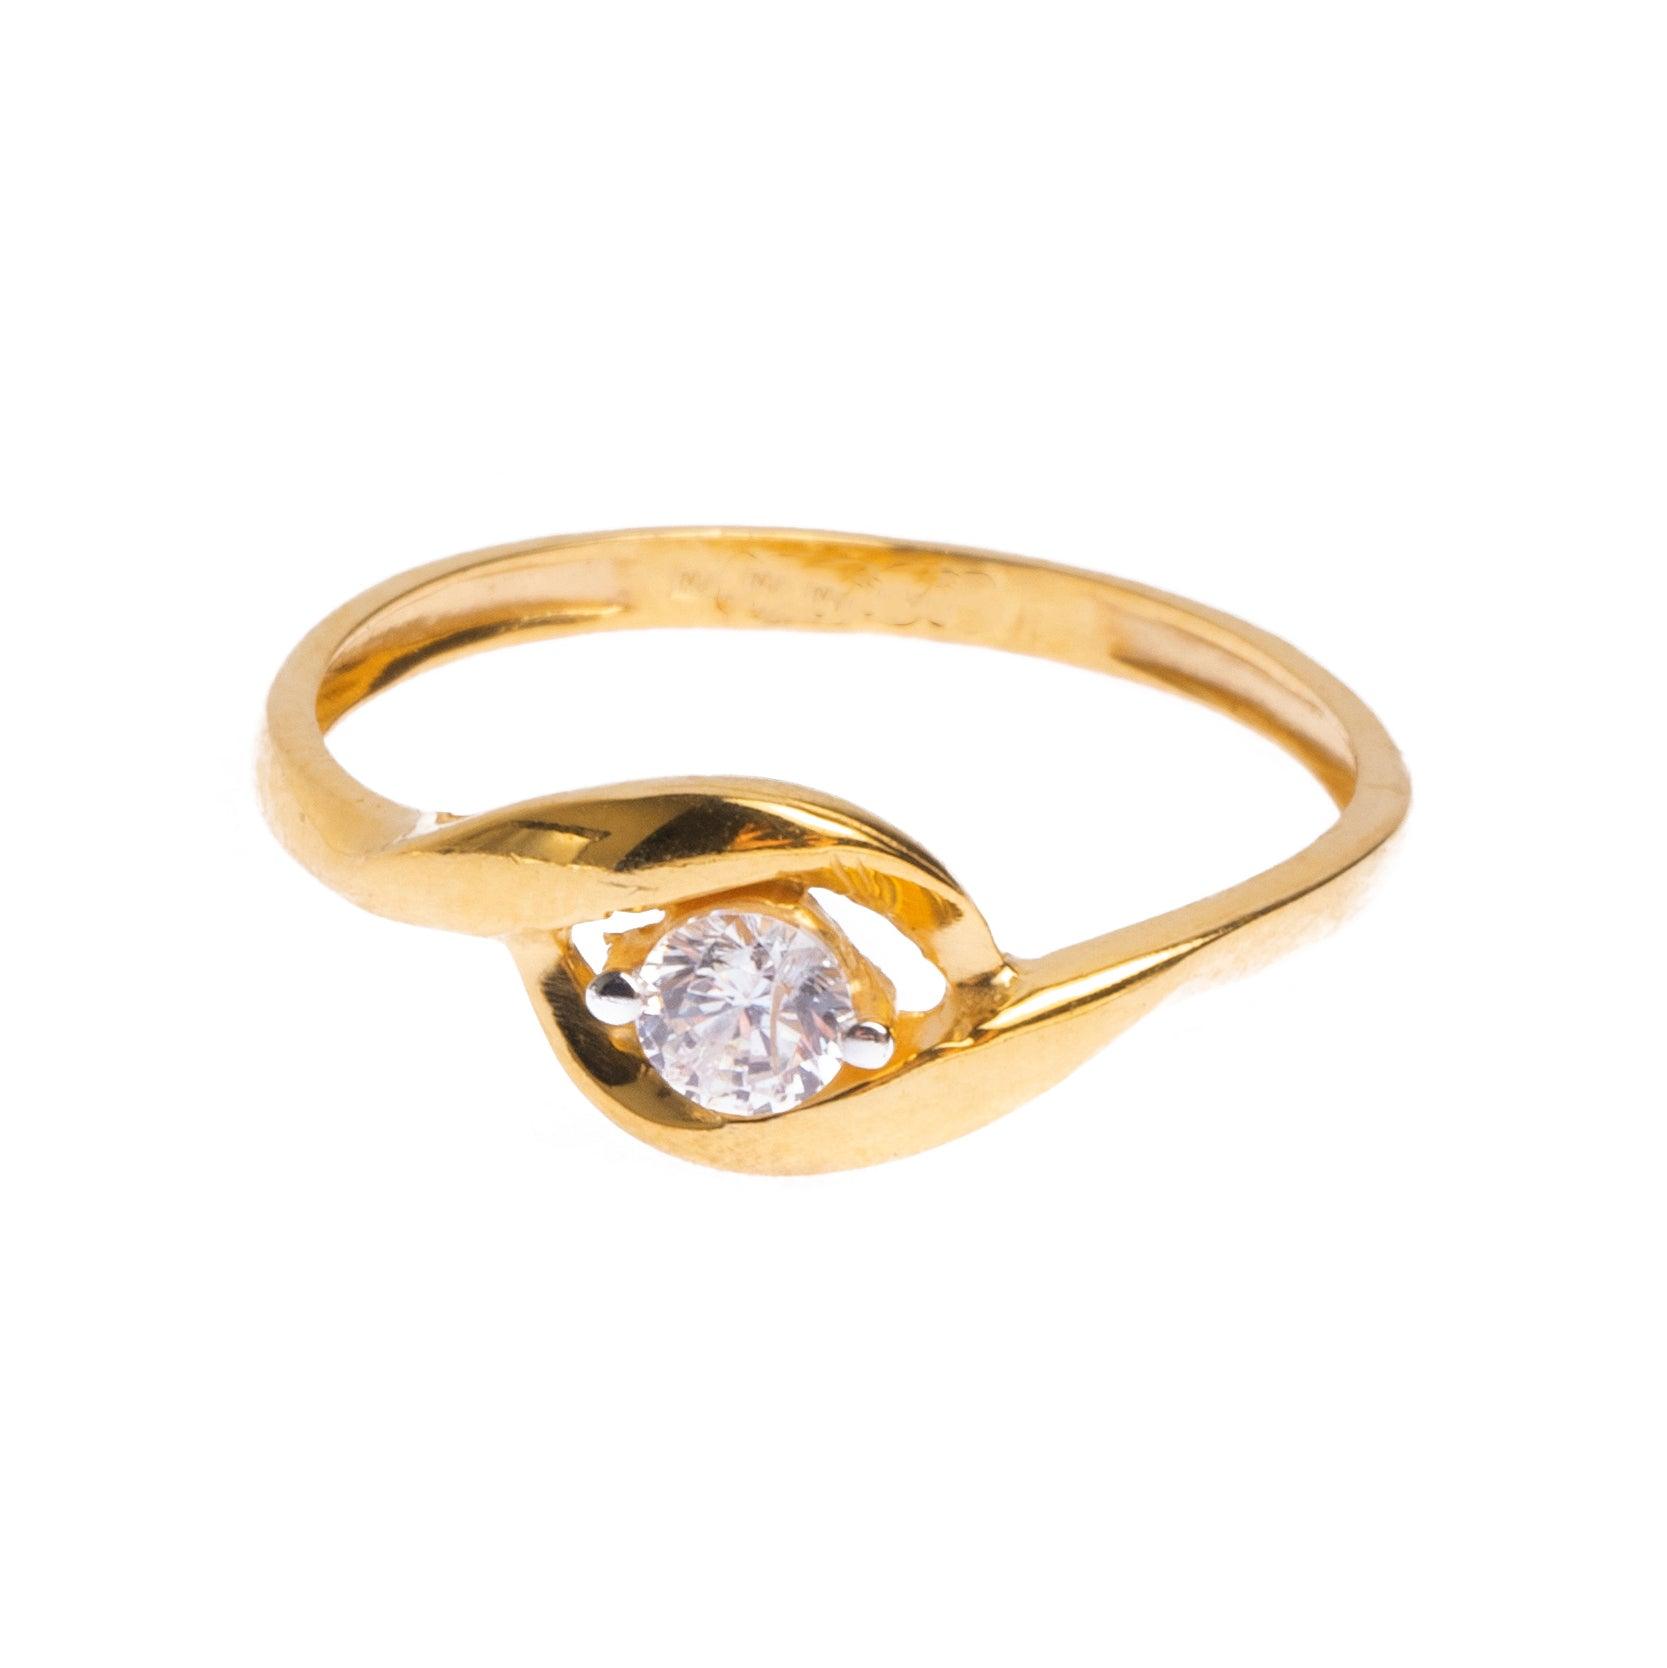 22ct Gold Ring with Swarovski Zirconia Stone LR16352 - Minar Jewellers